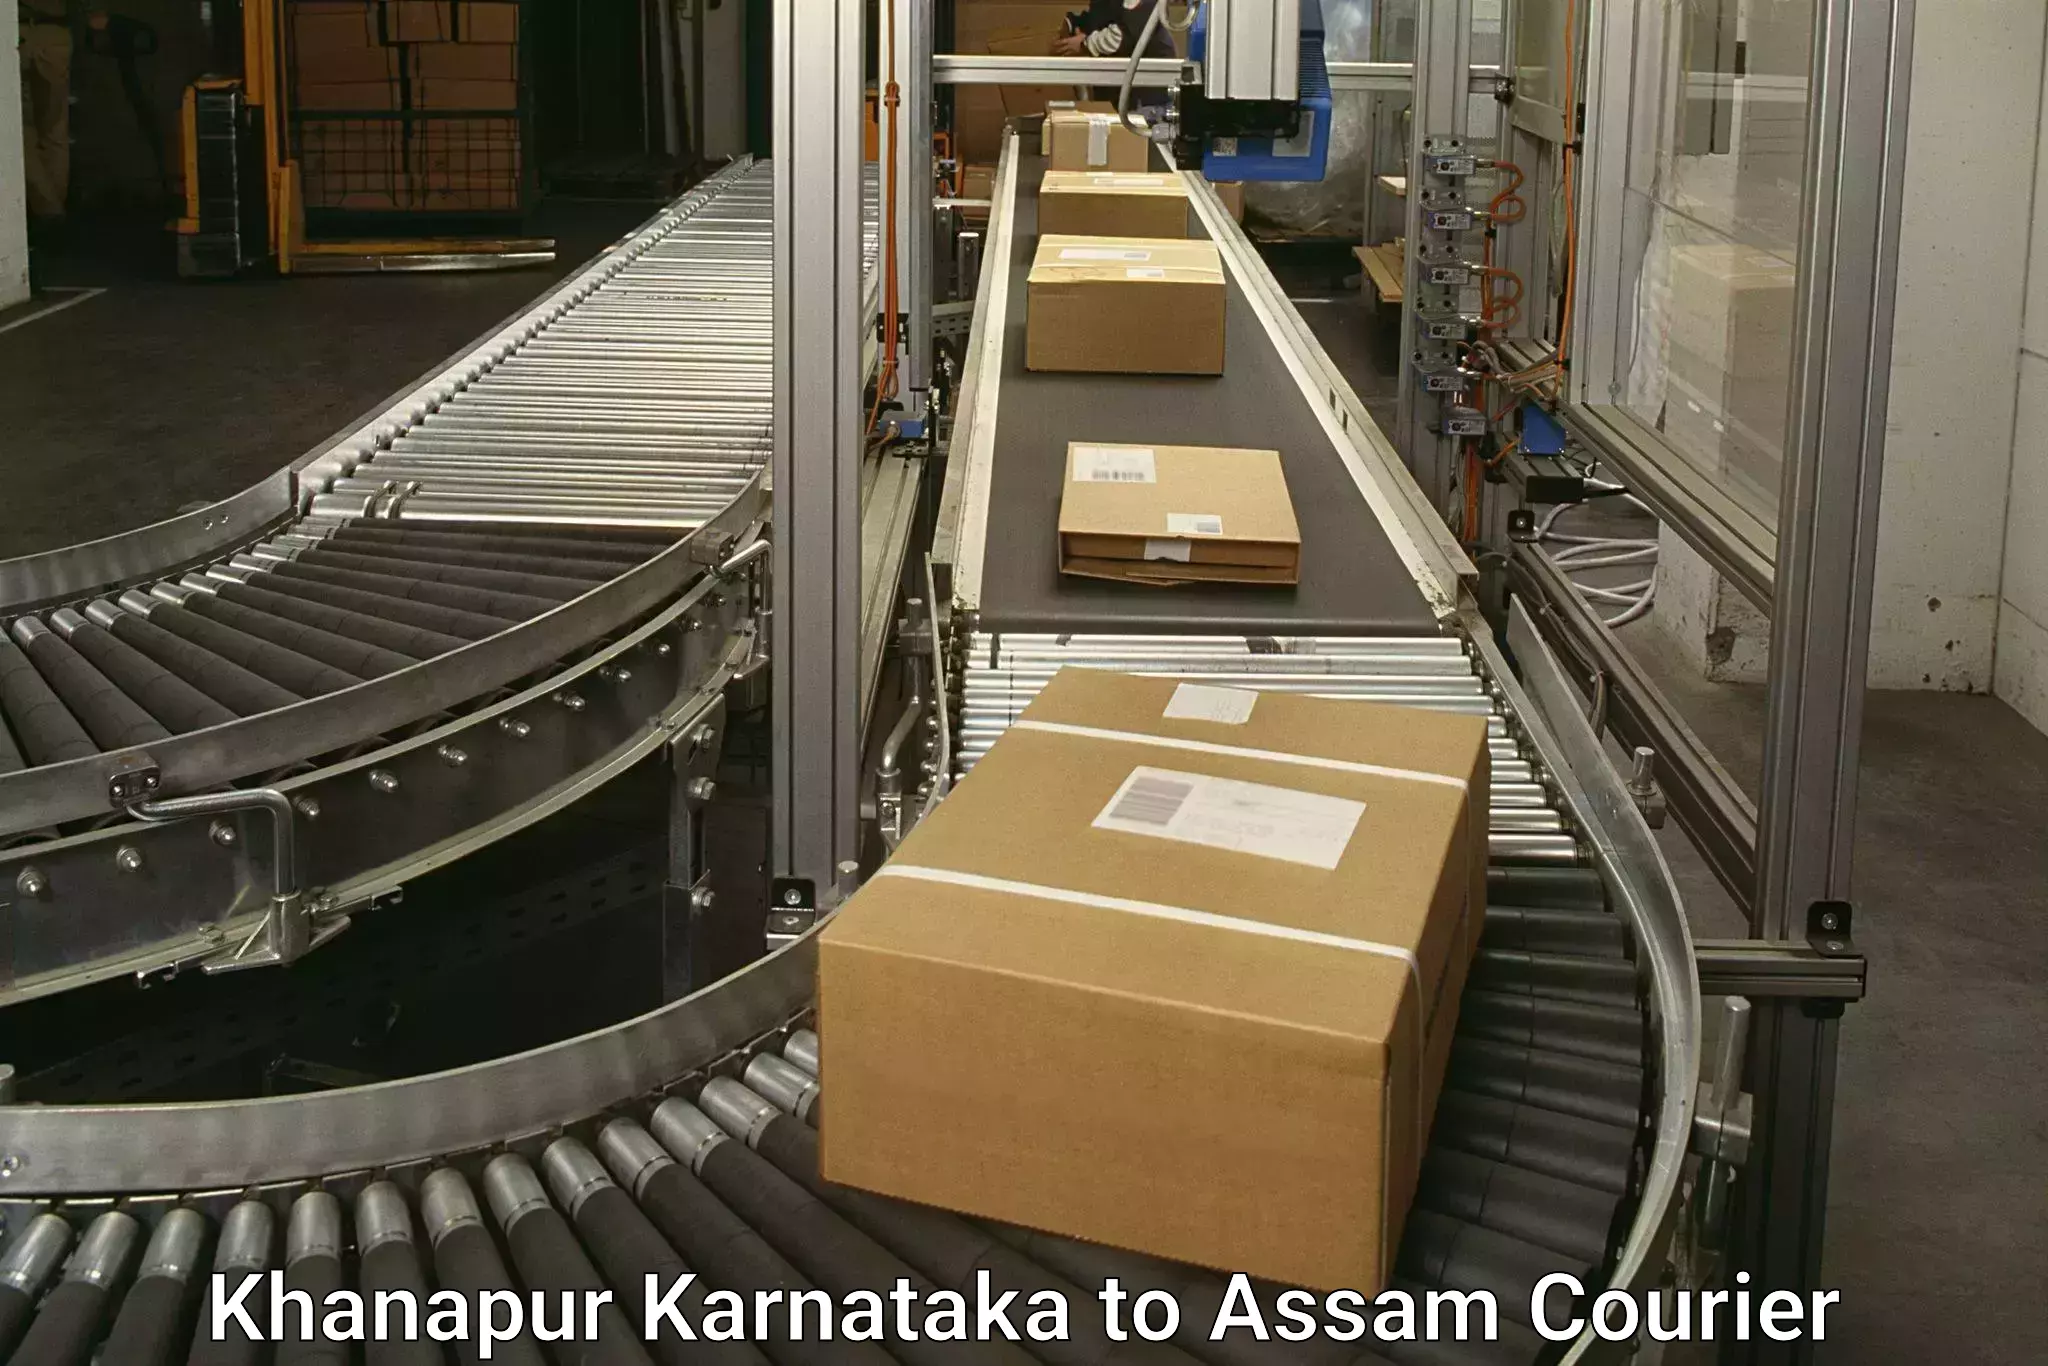 Reliable delivery network Khanapur Karnataka to Darranga Mela